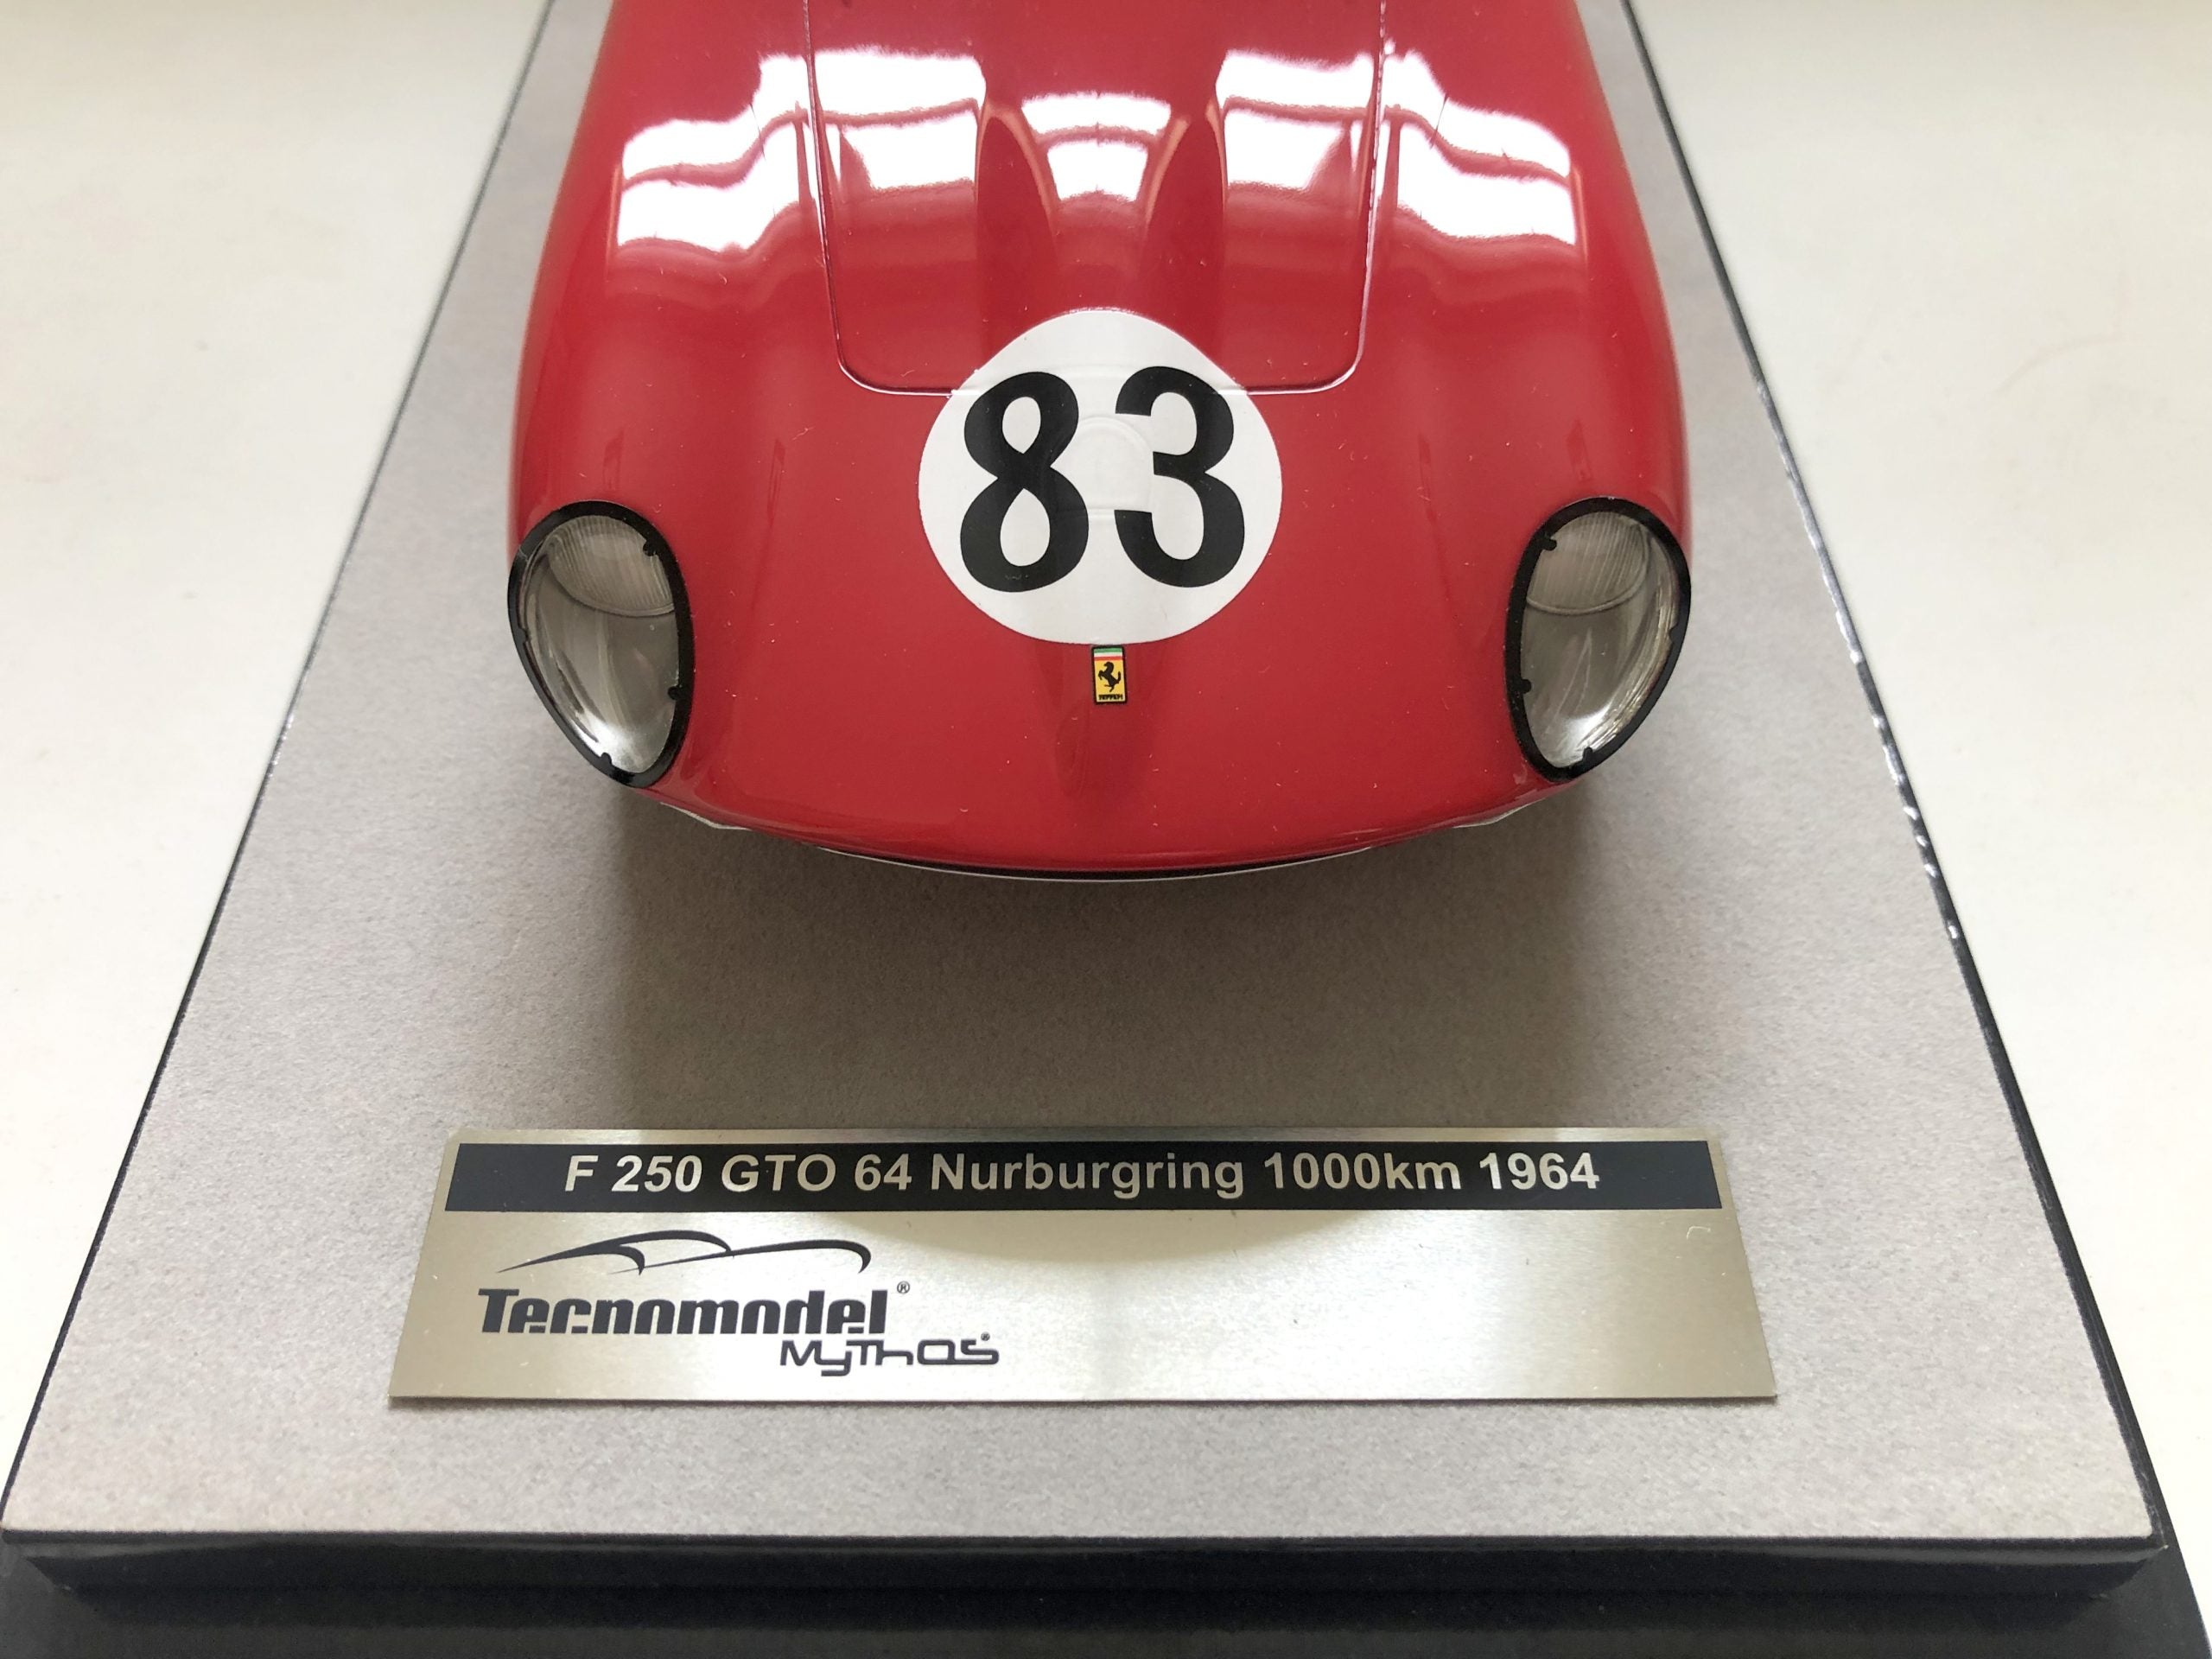 Ferrari 250GTO escala 1:18 1964 Nurburgring 1000kms